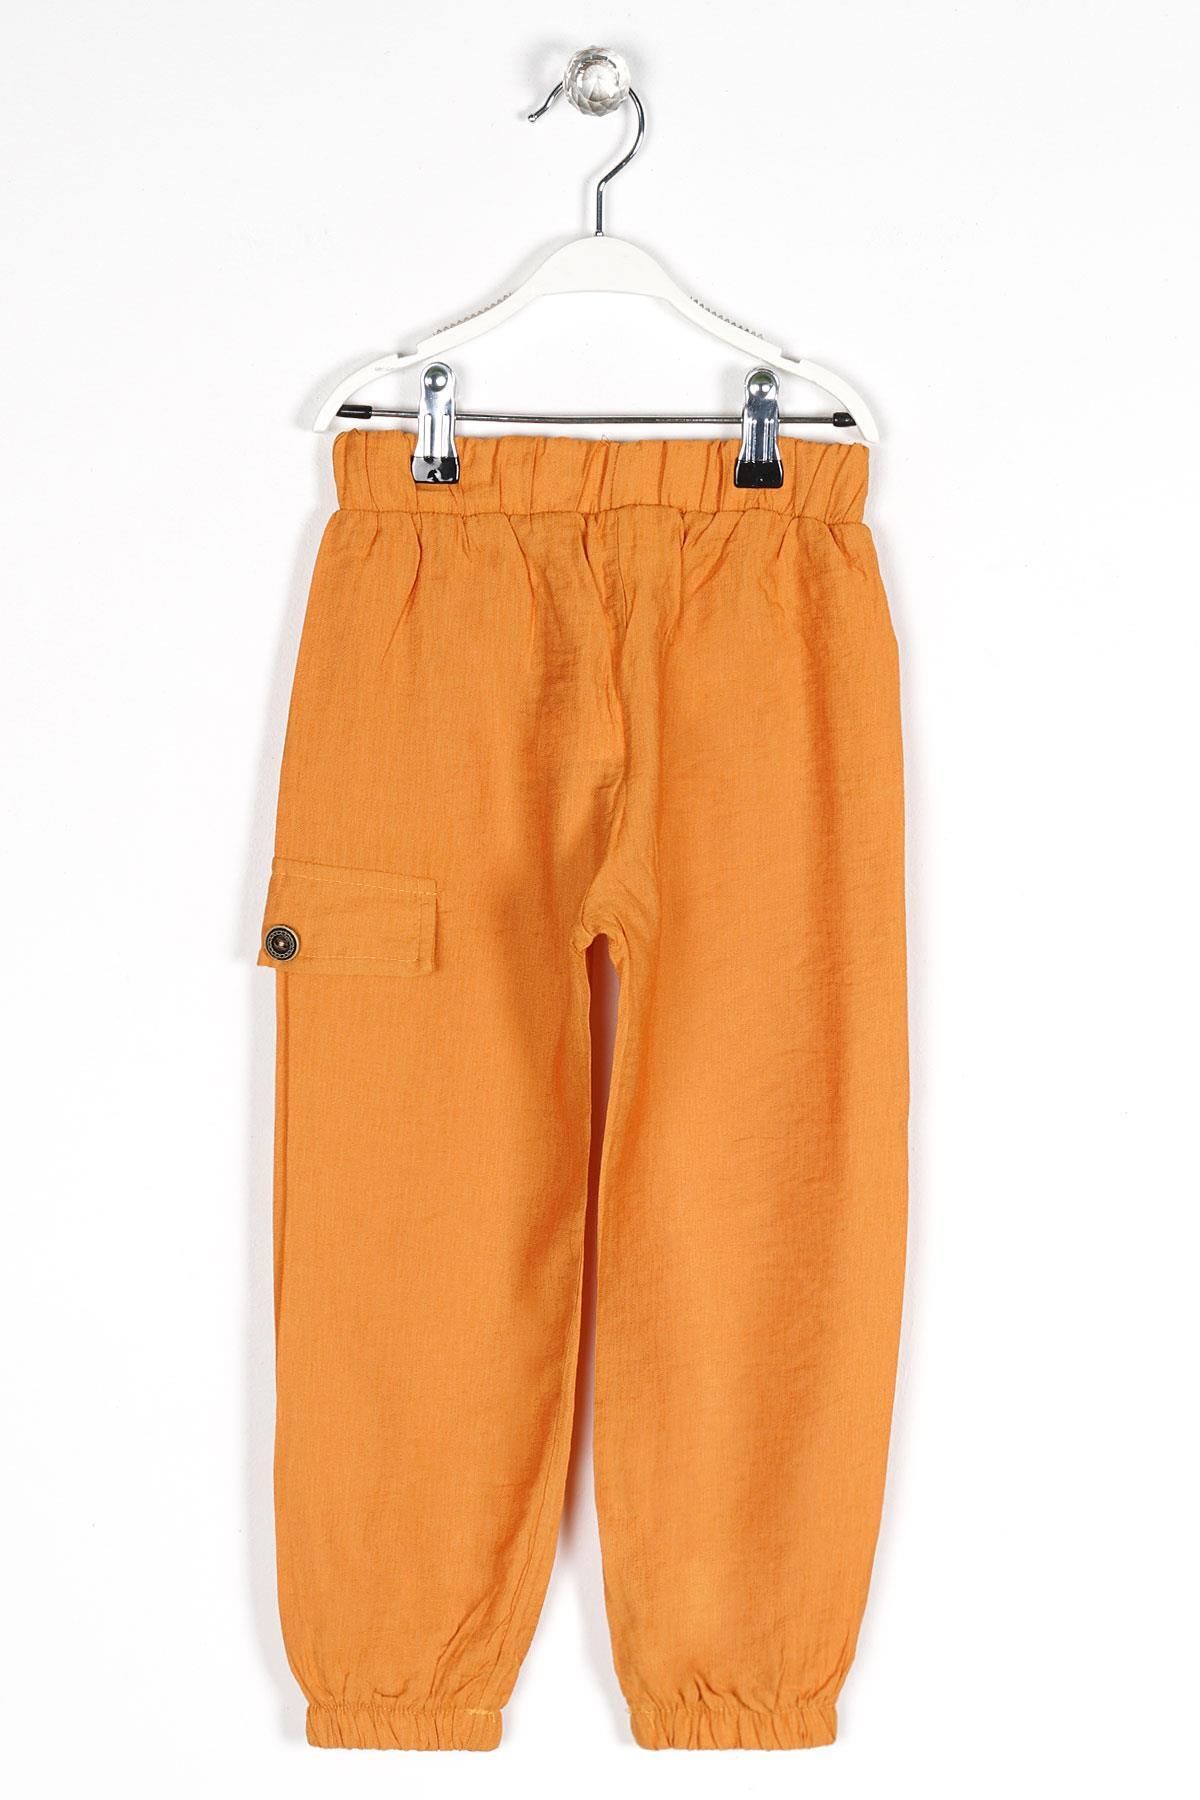 zepkids Oranj Renk Kız Çocuk Pantolon